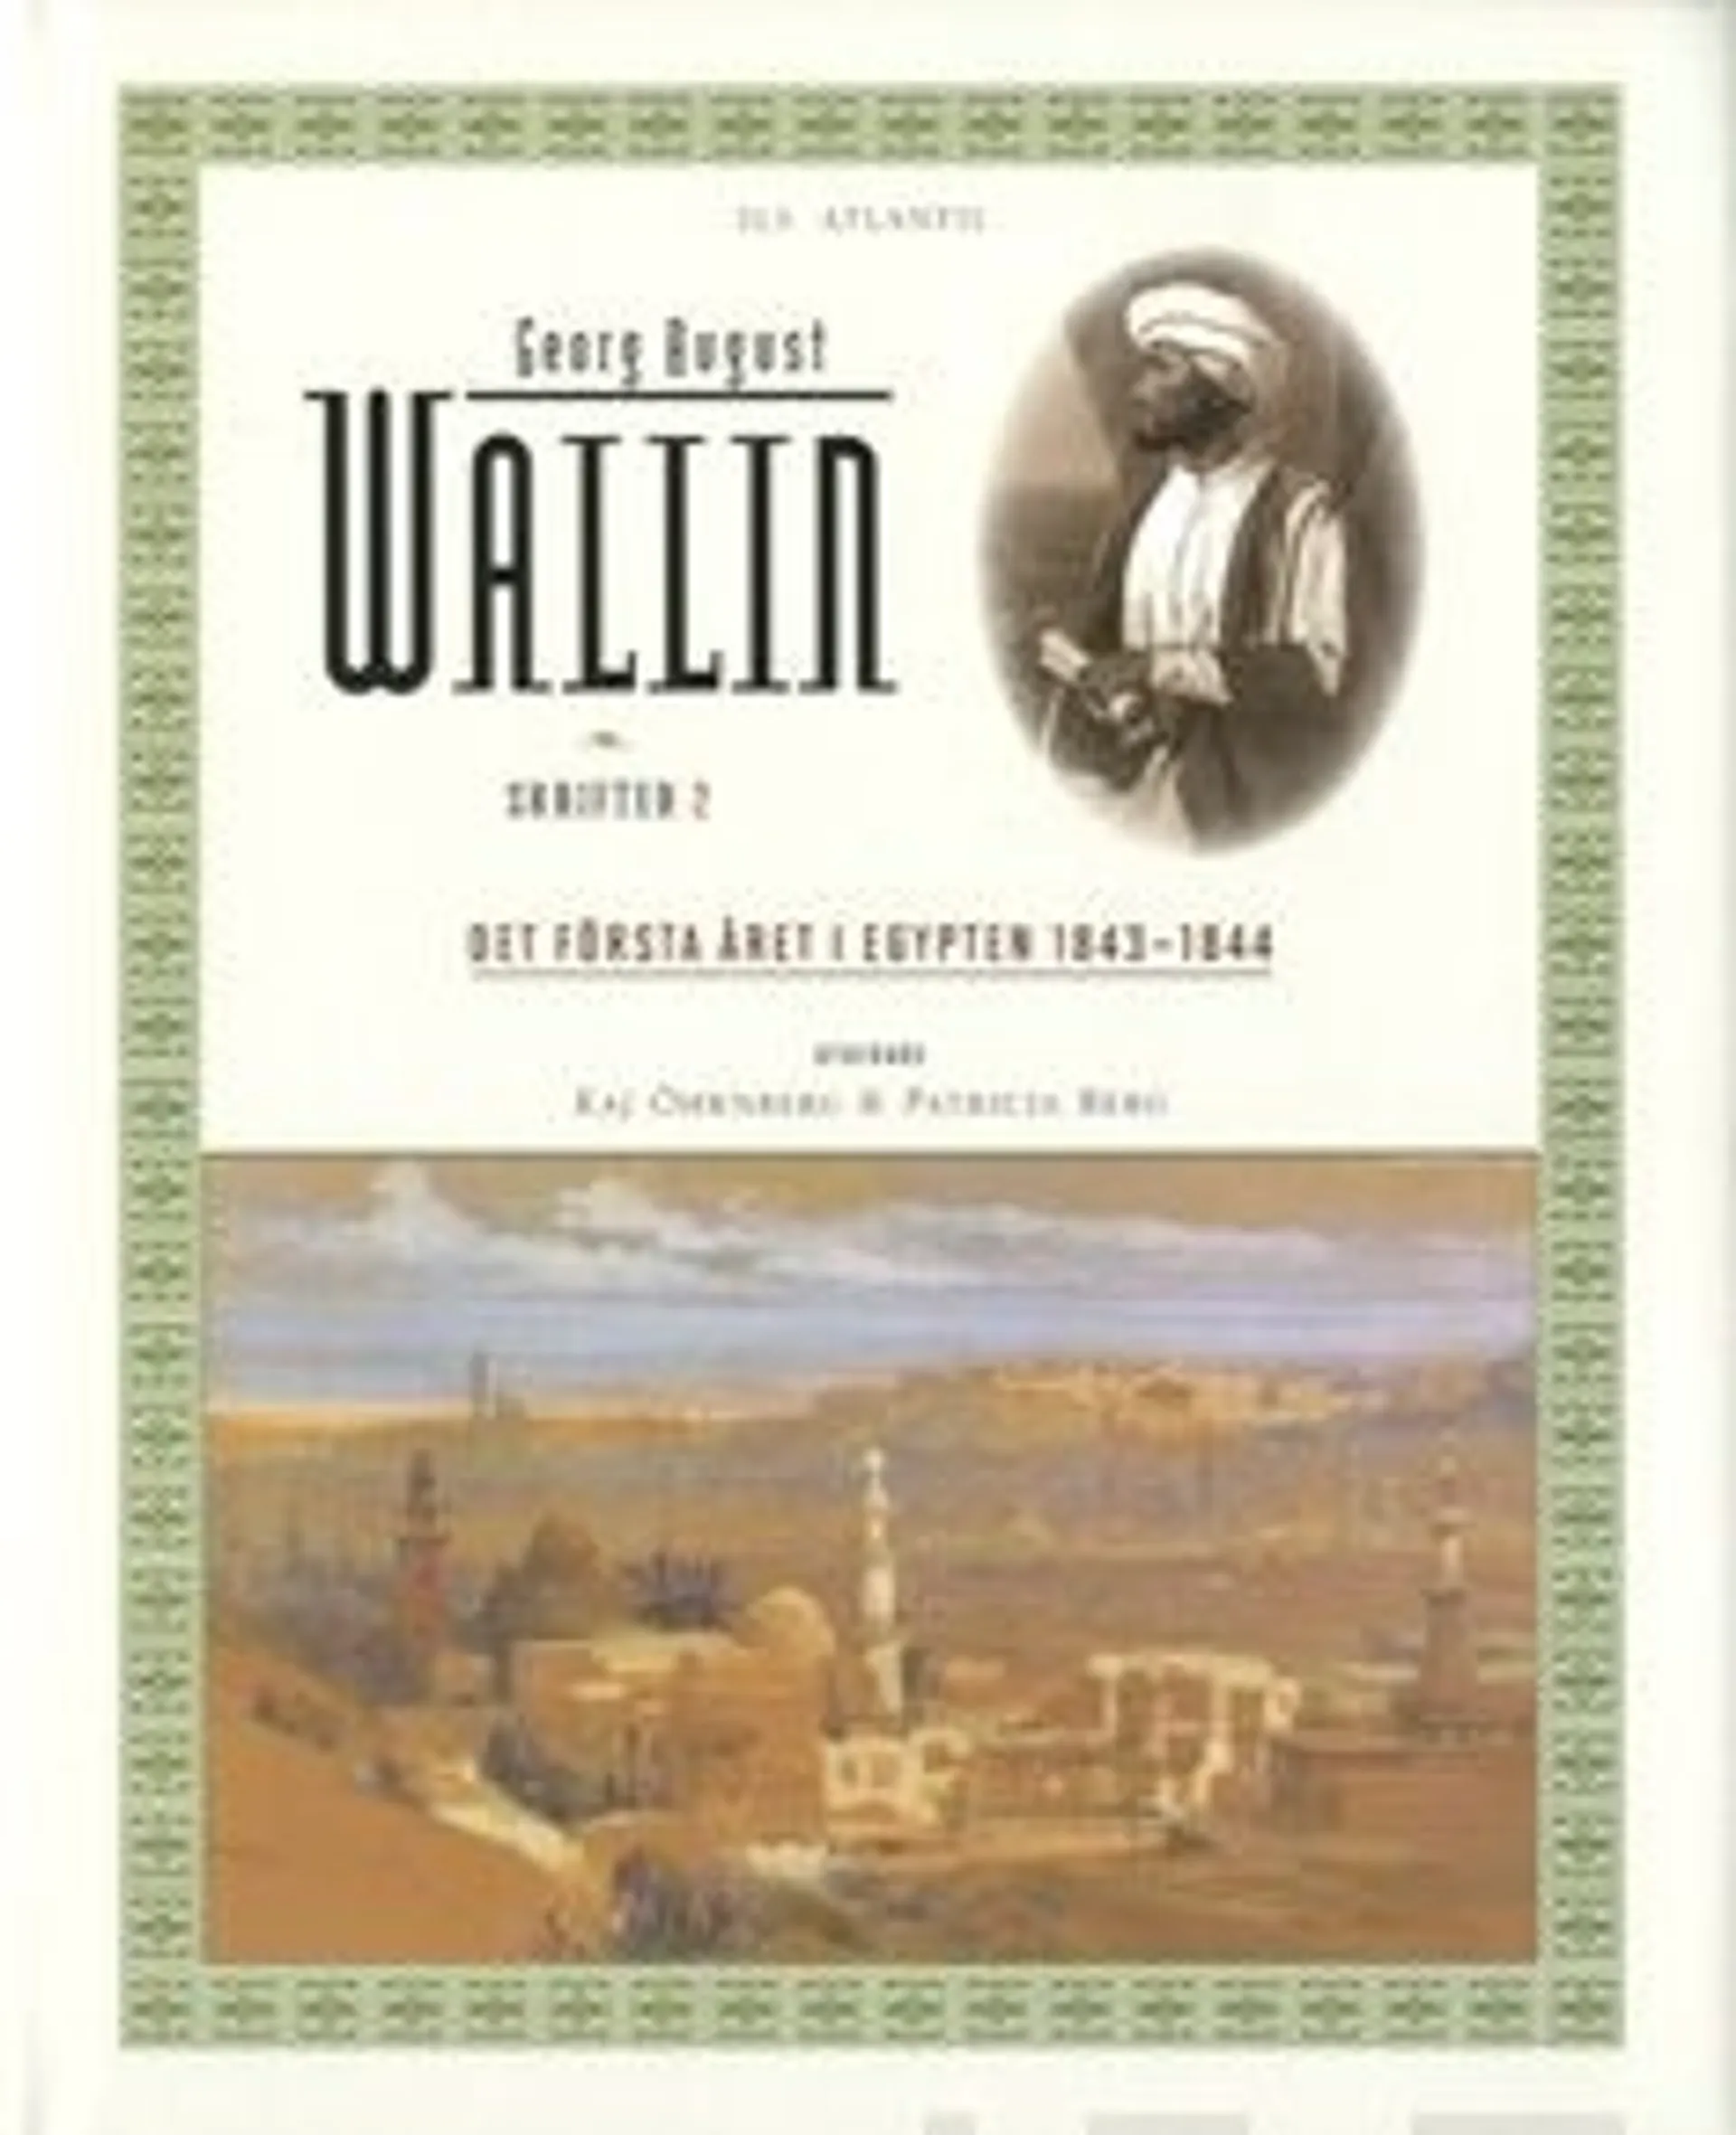 Öhrnberg, Georg August Wallin